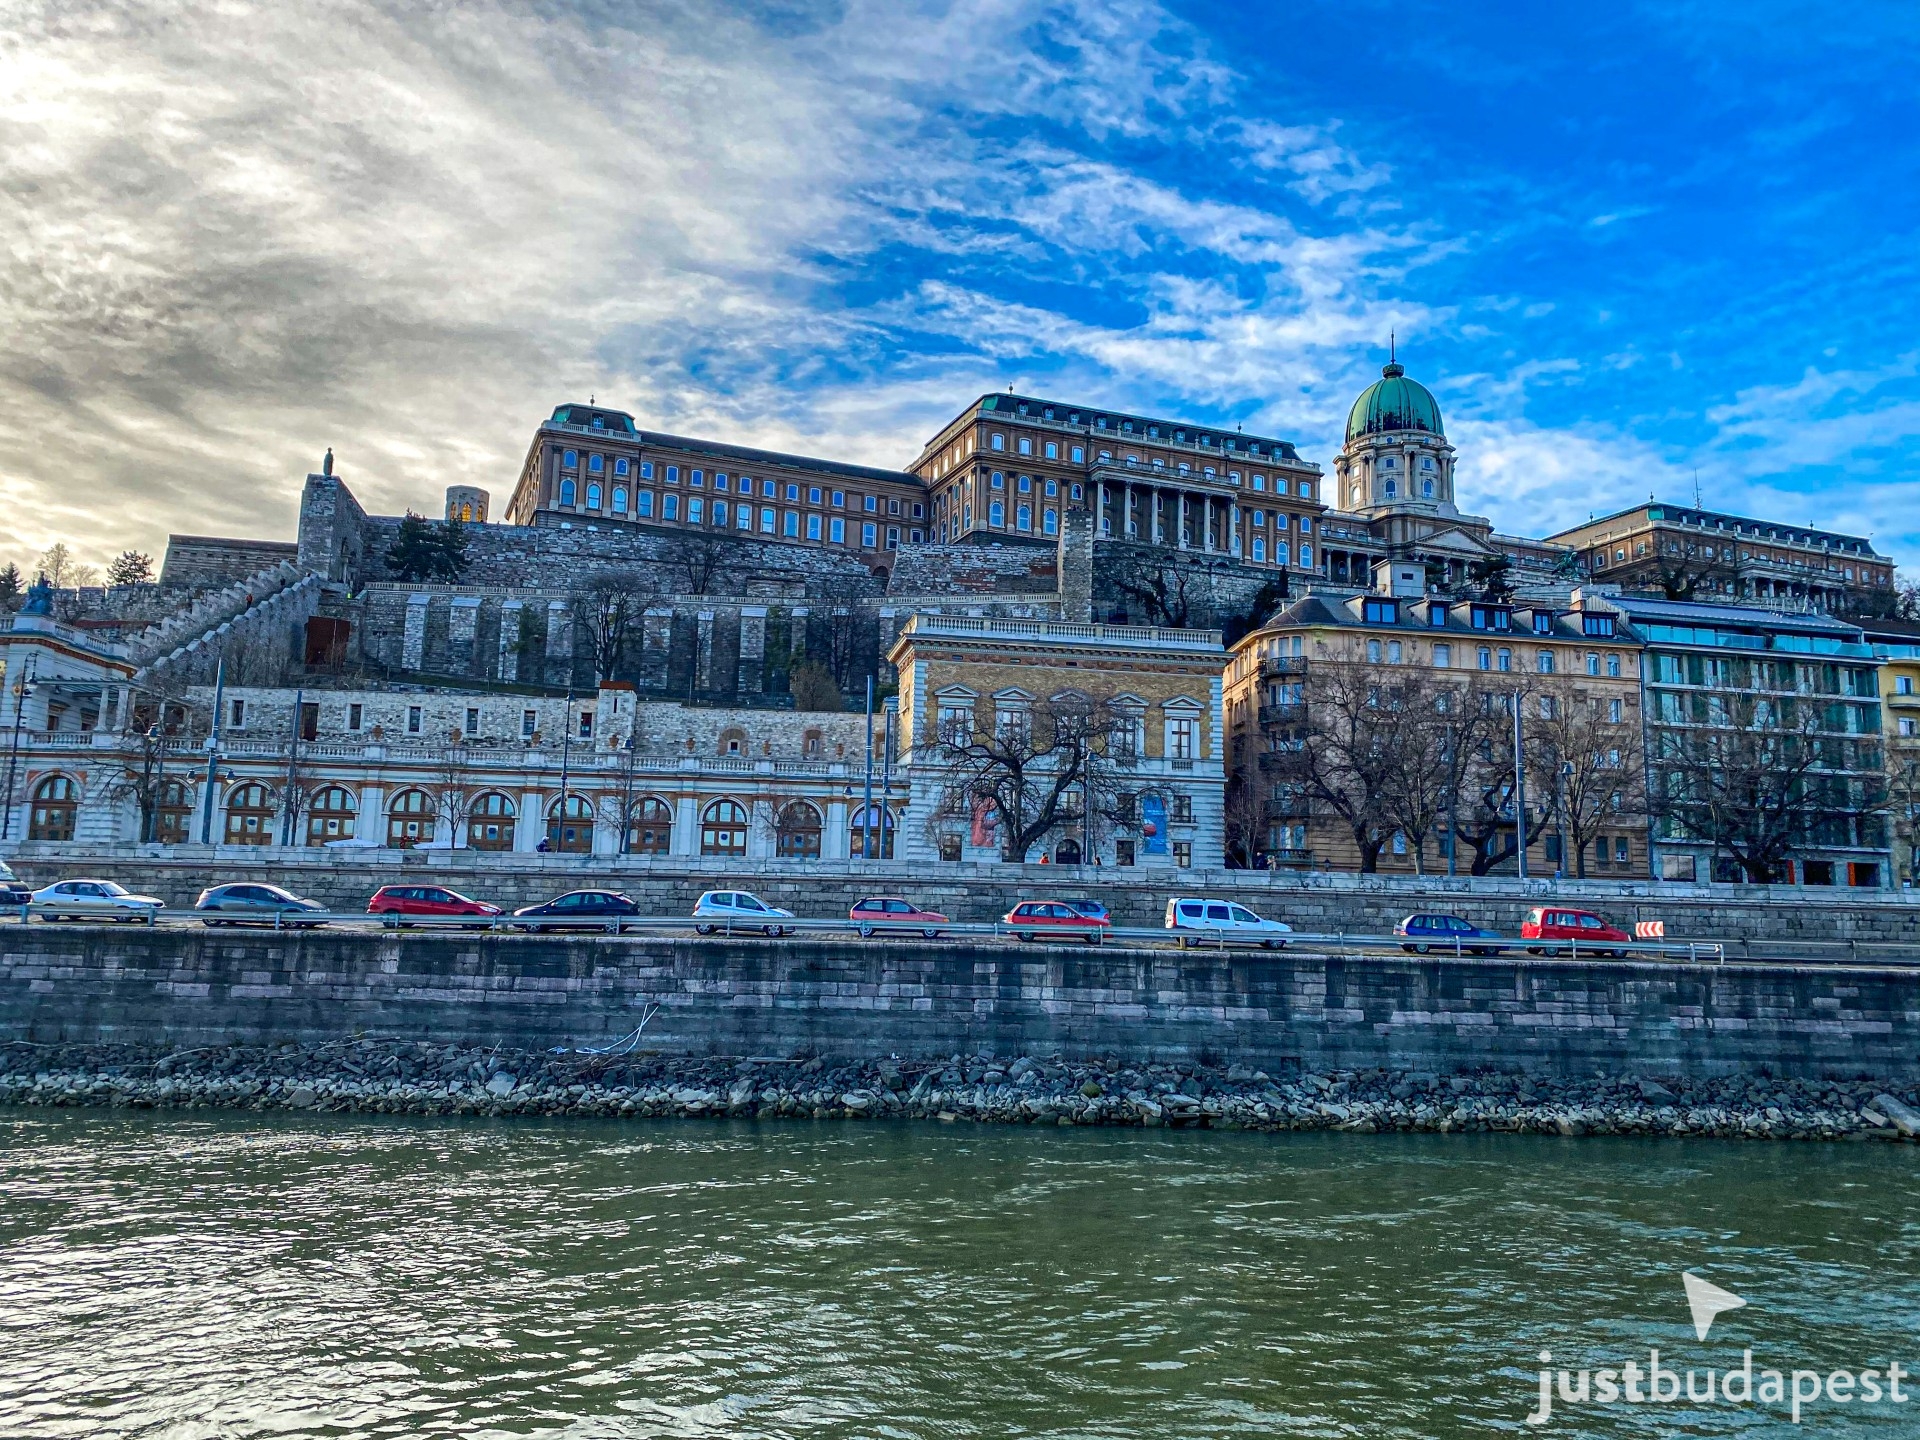 The breathtaking castle of Buda